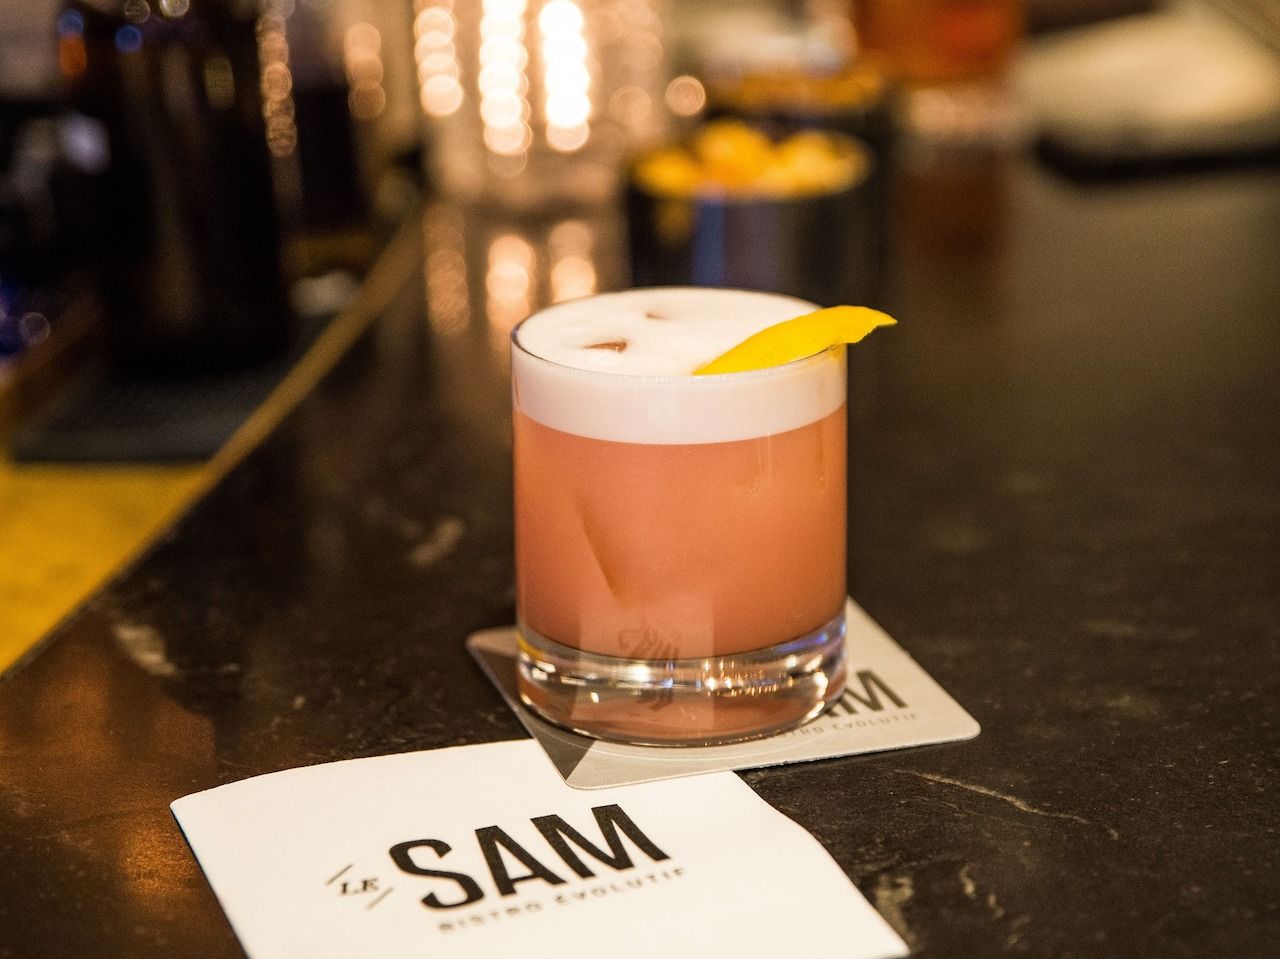 Cocktail at Le Sam, Bistro Evolutif